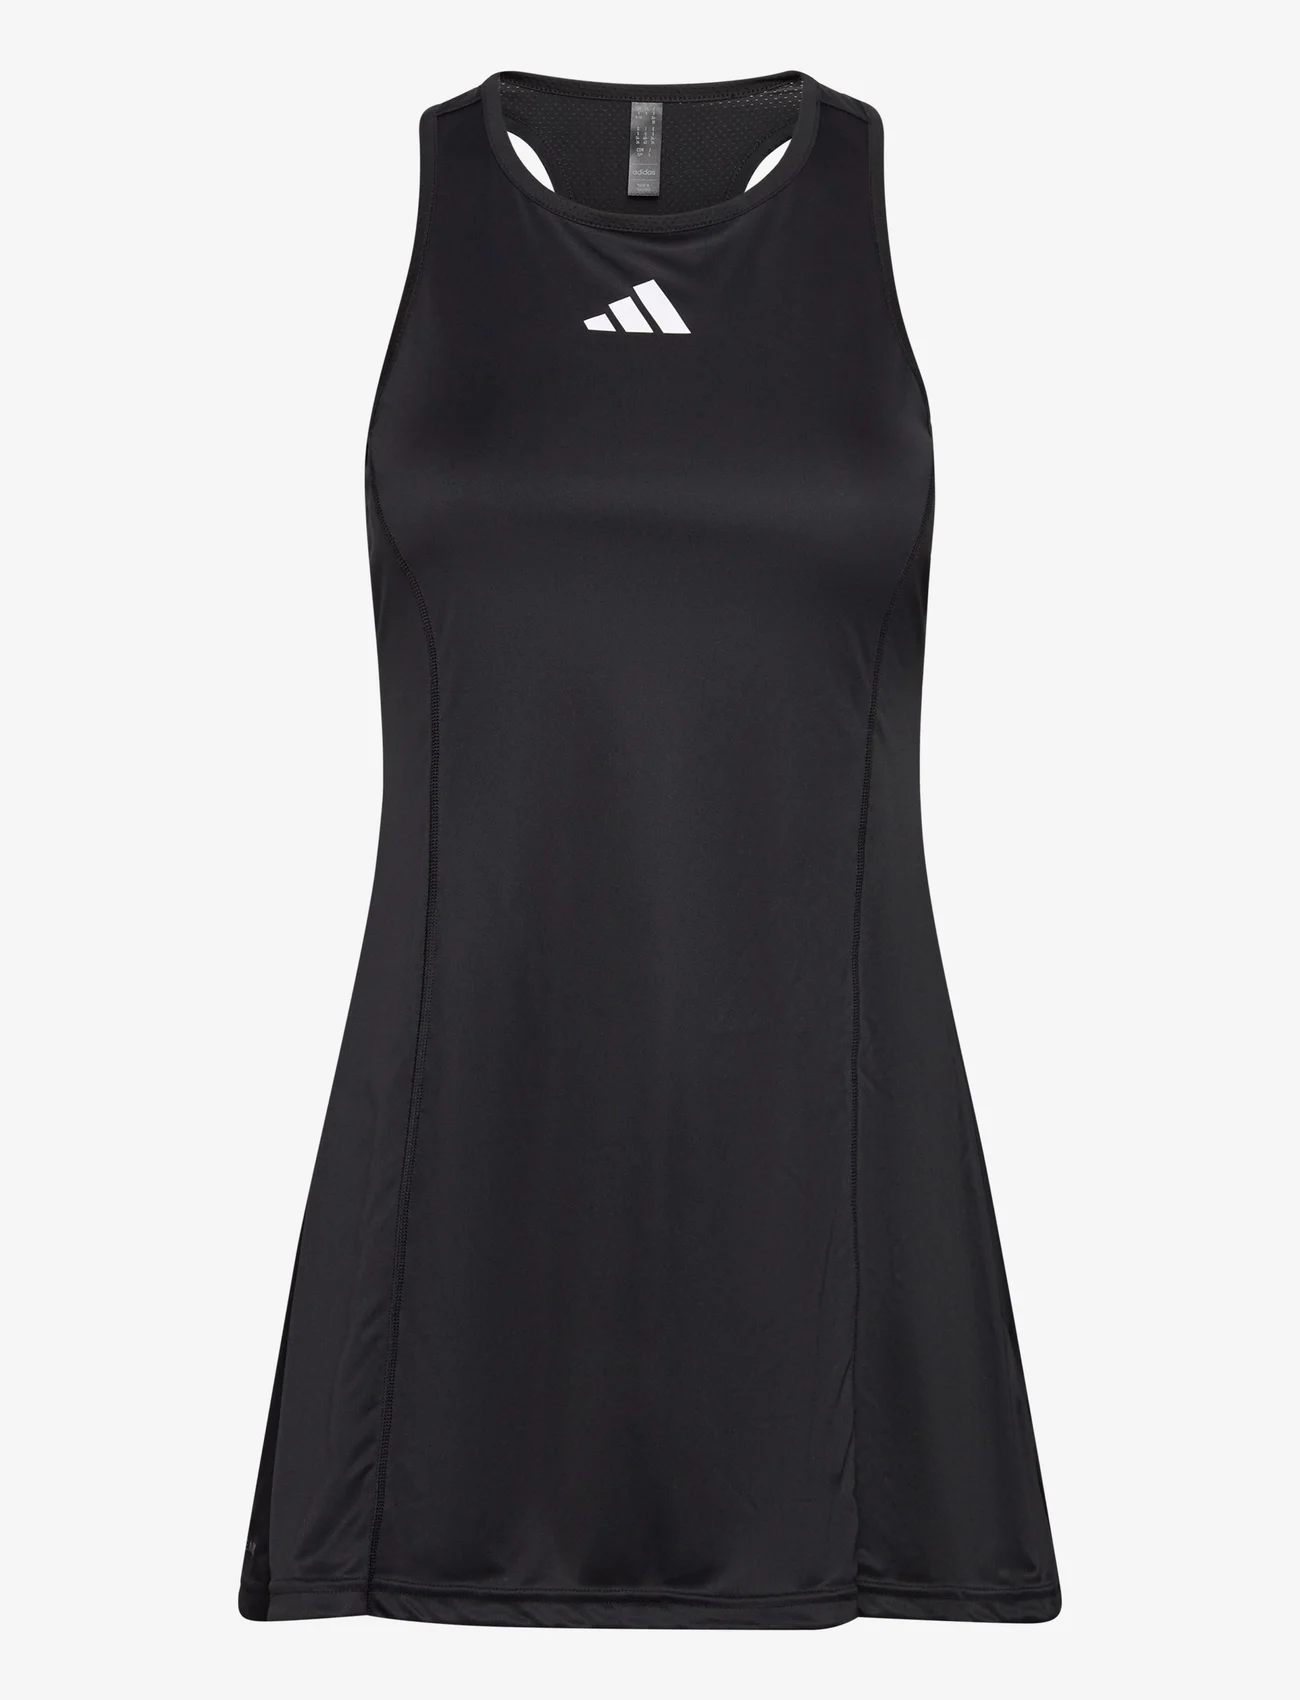 adidas Performance - CLUB DRESS - sportskjoler - 000/black - 0